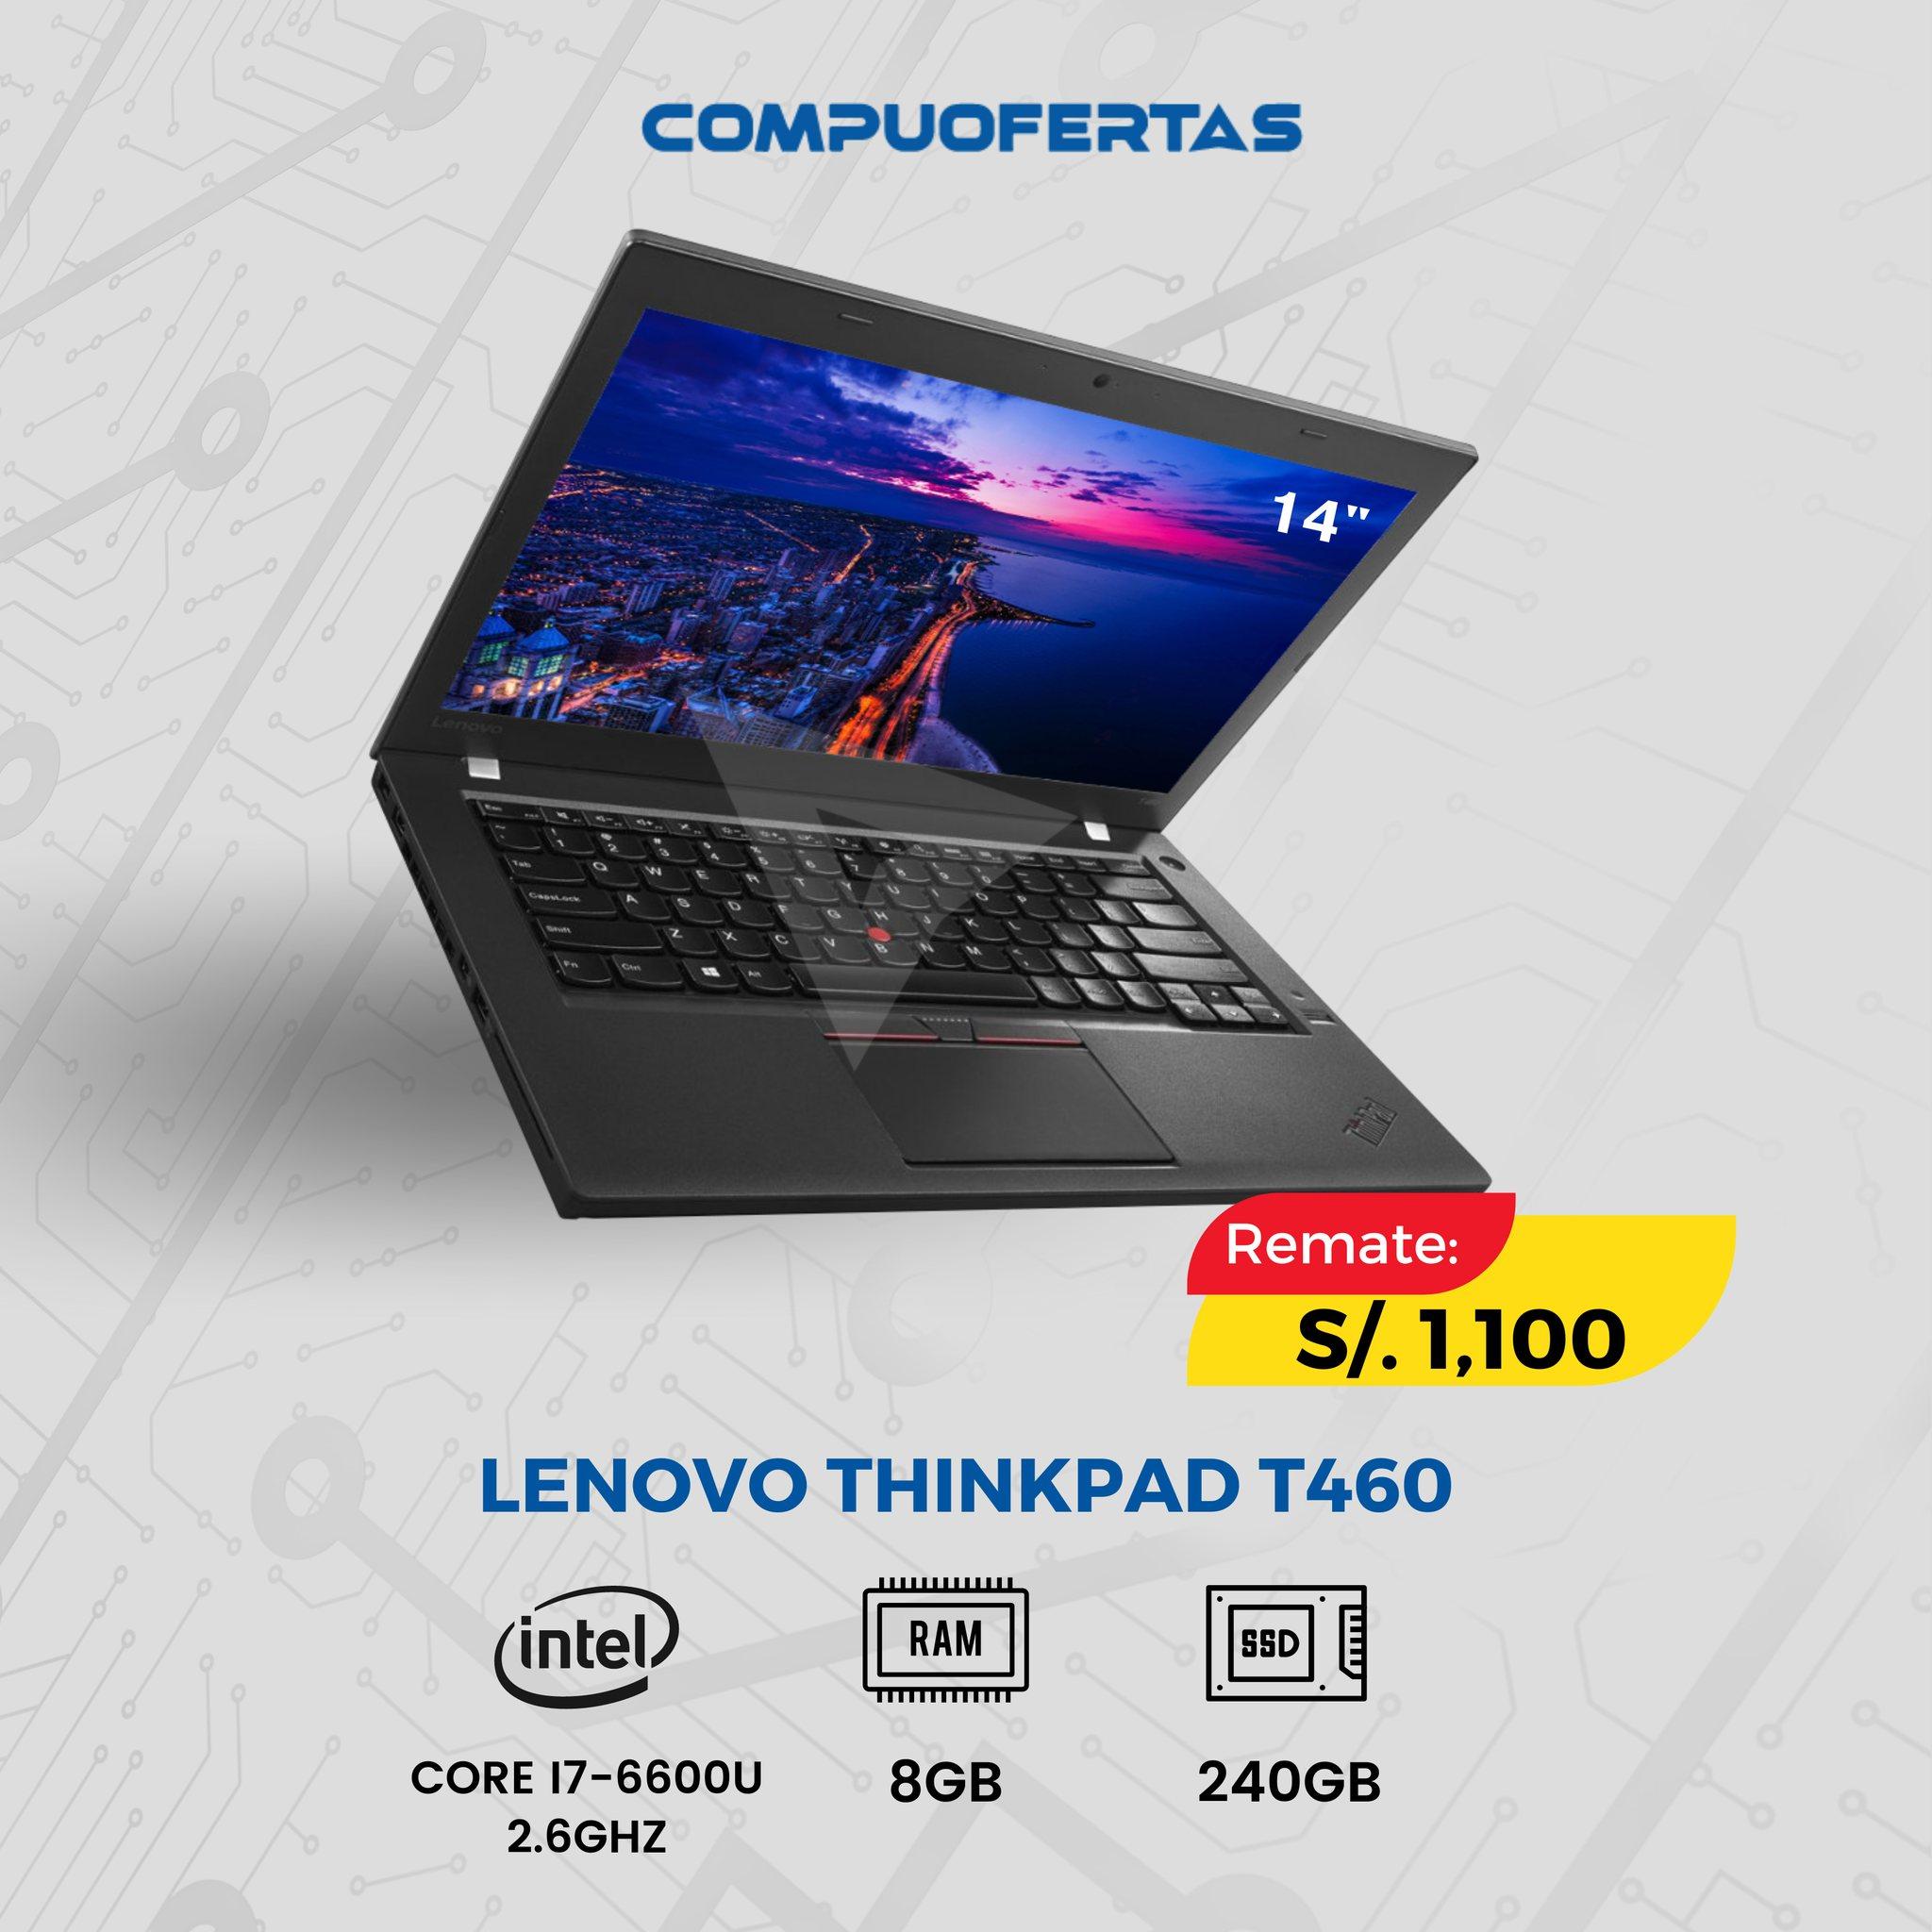 LAPTOP LENOVO THINKPAD T460 | Core i7 | RAM 8GB |SSD | REMATE S/ 1,100